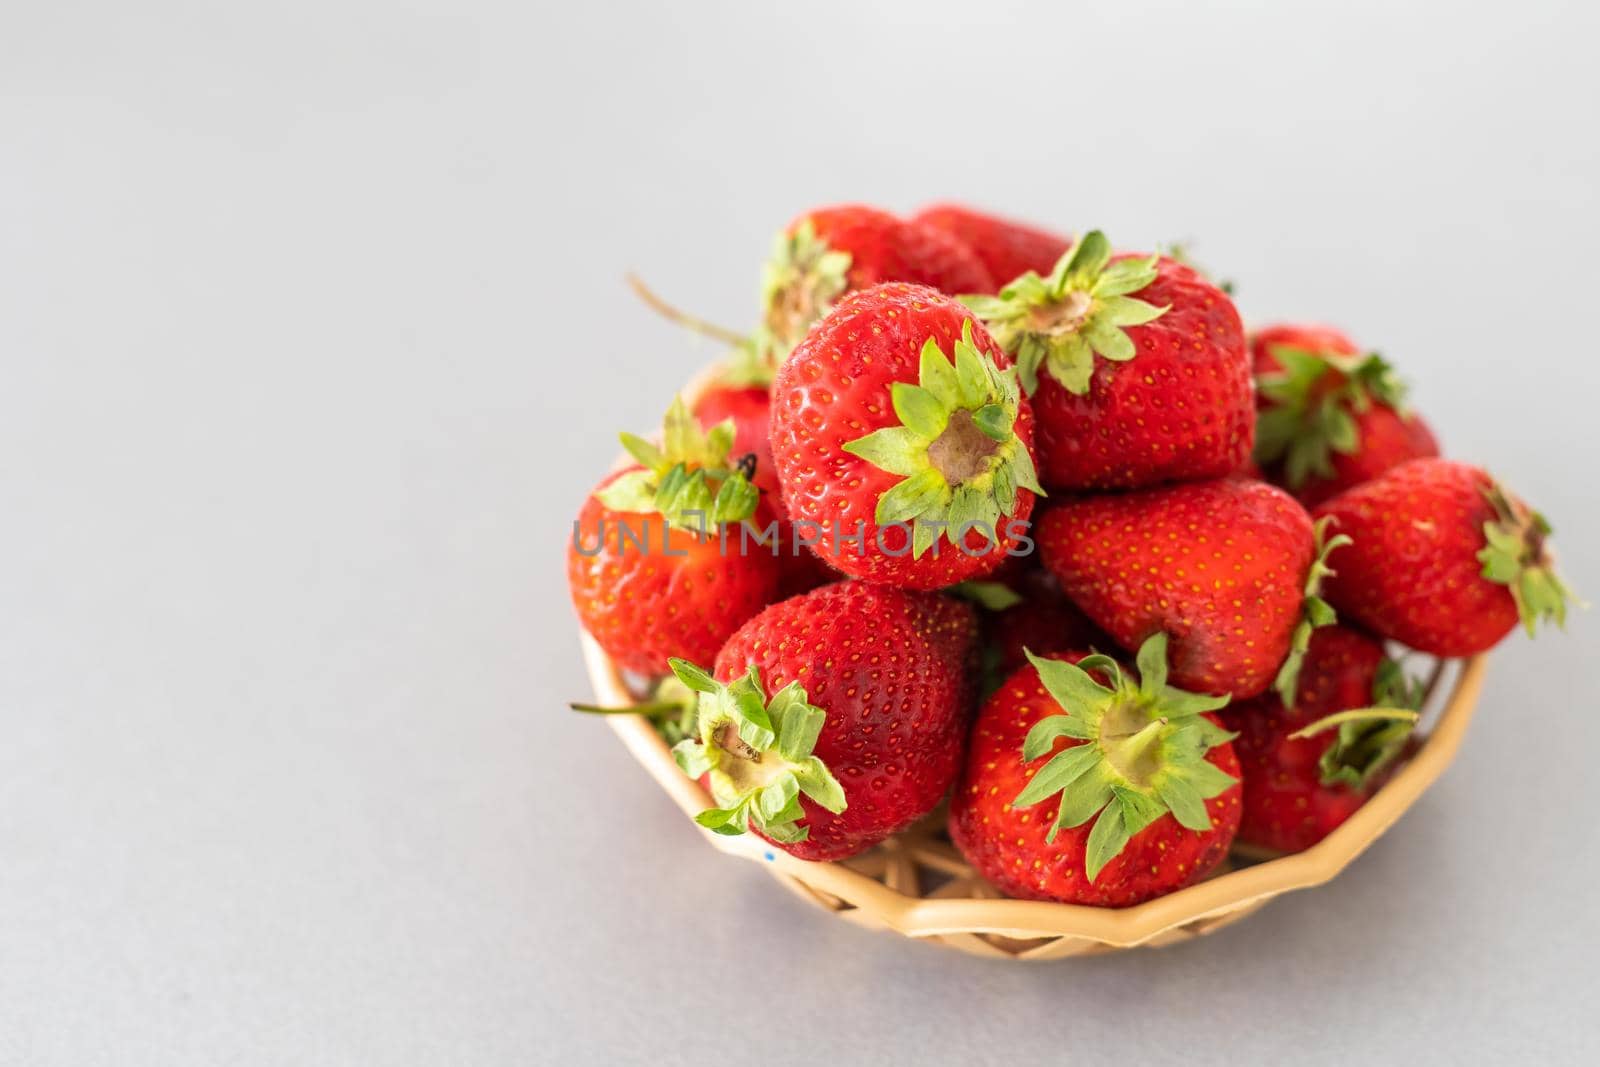 strawberries in a wicker plate by Andelov13